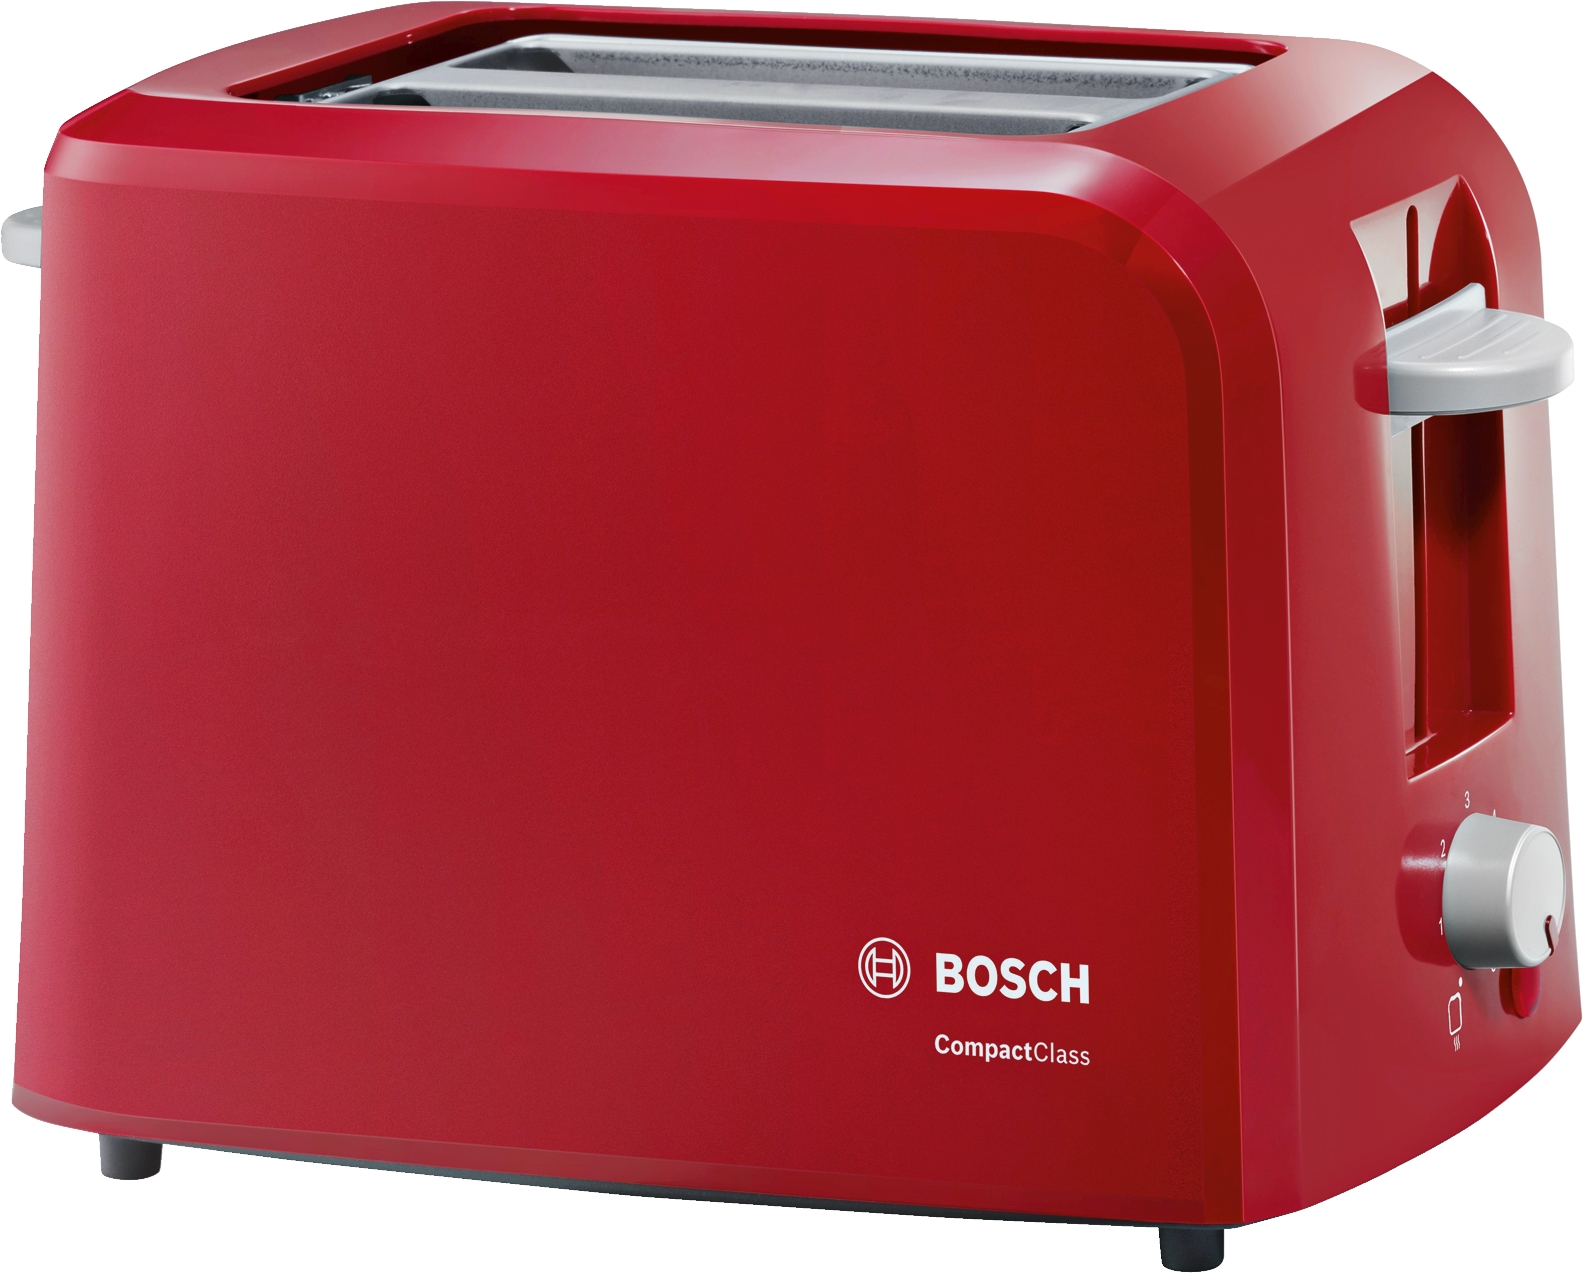 TAT3A014 Prăjitor pâine compact Compact Class Red Bosch, 980W, Roşu